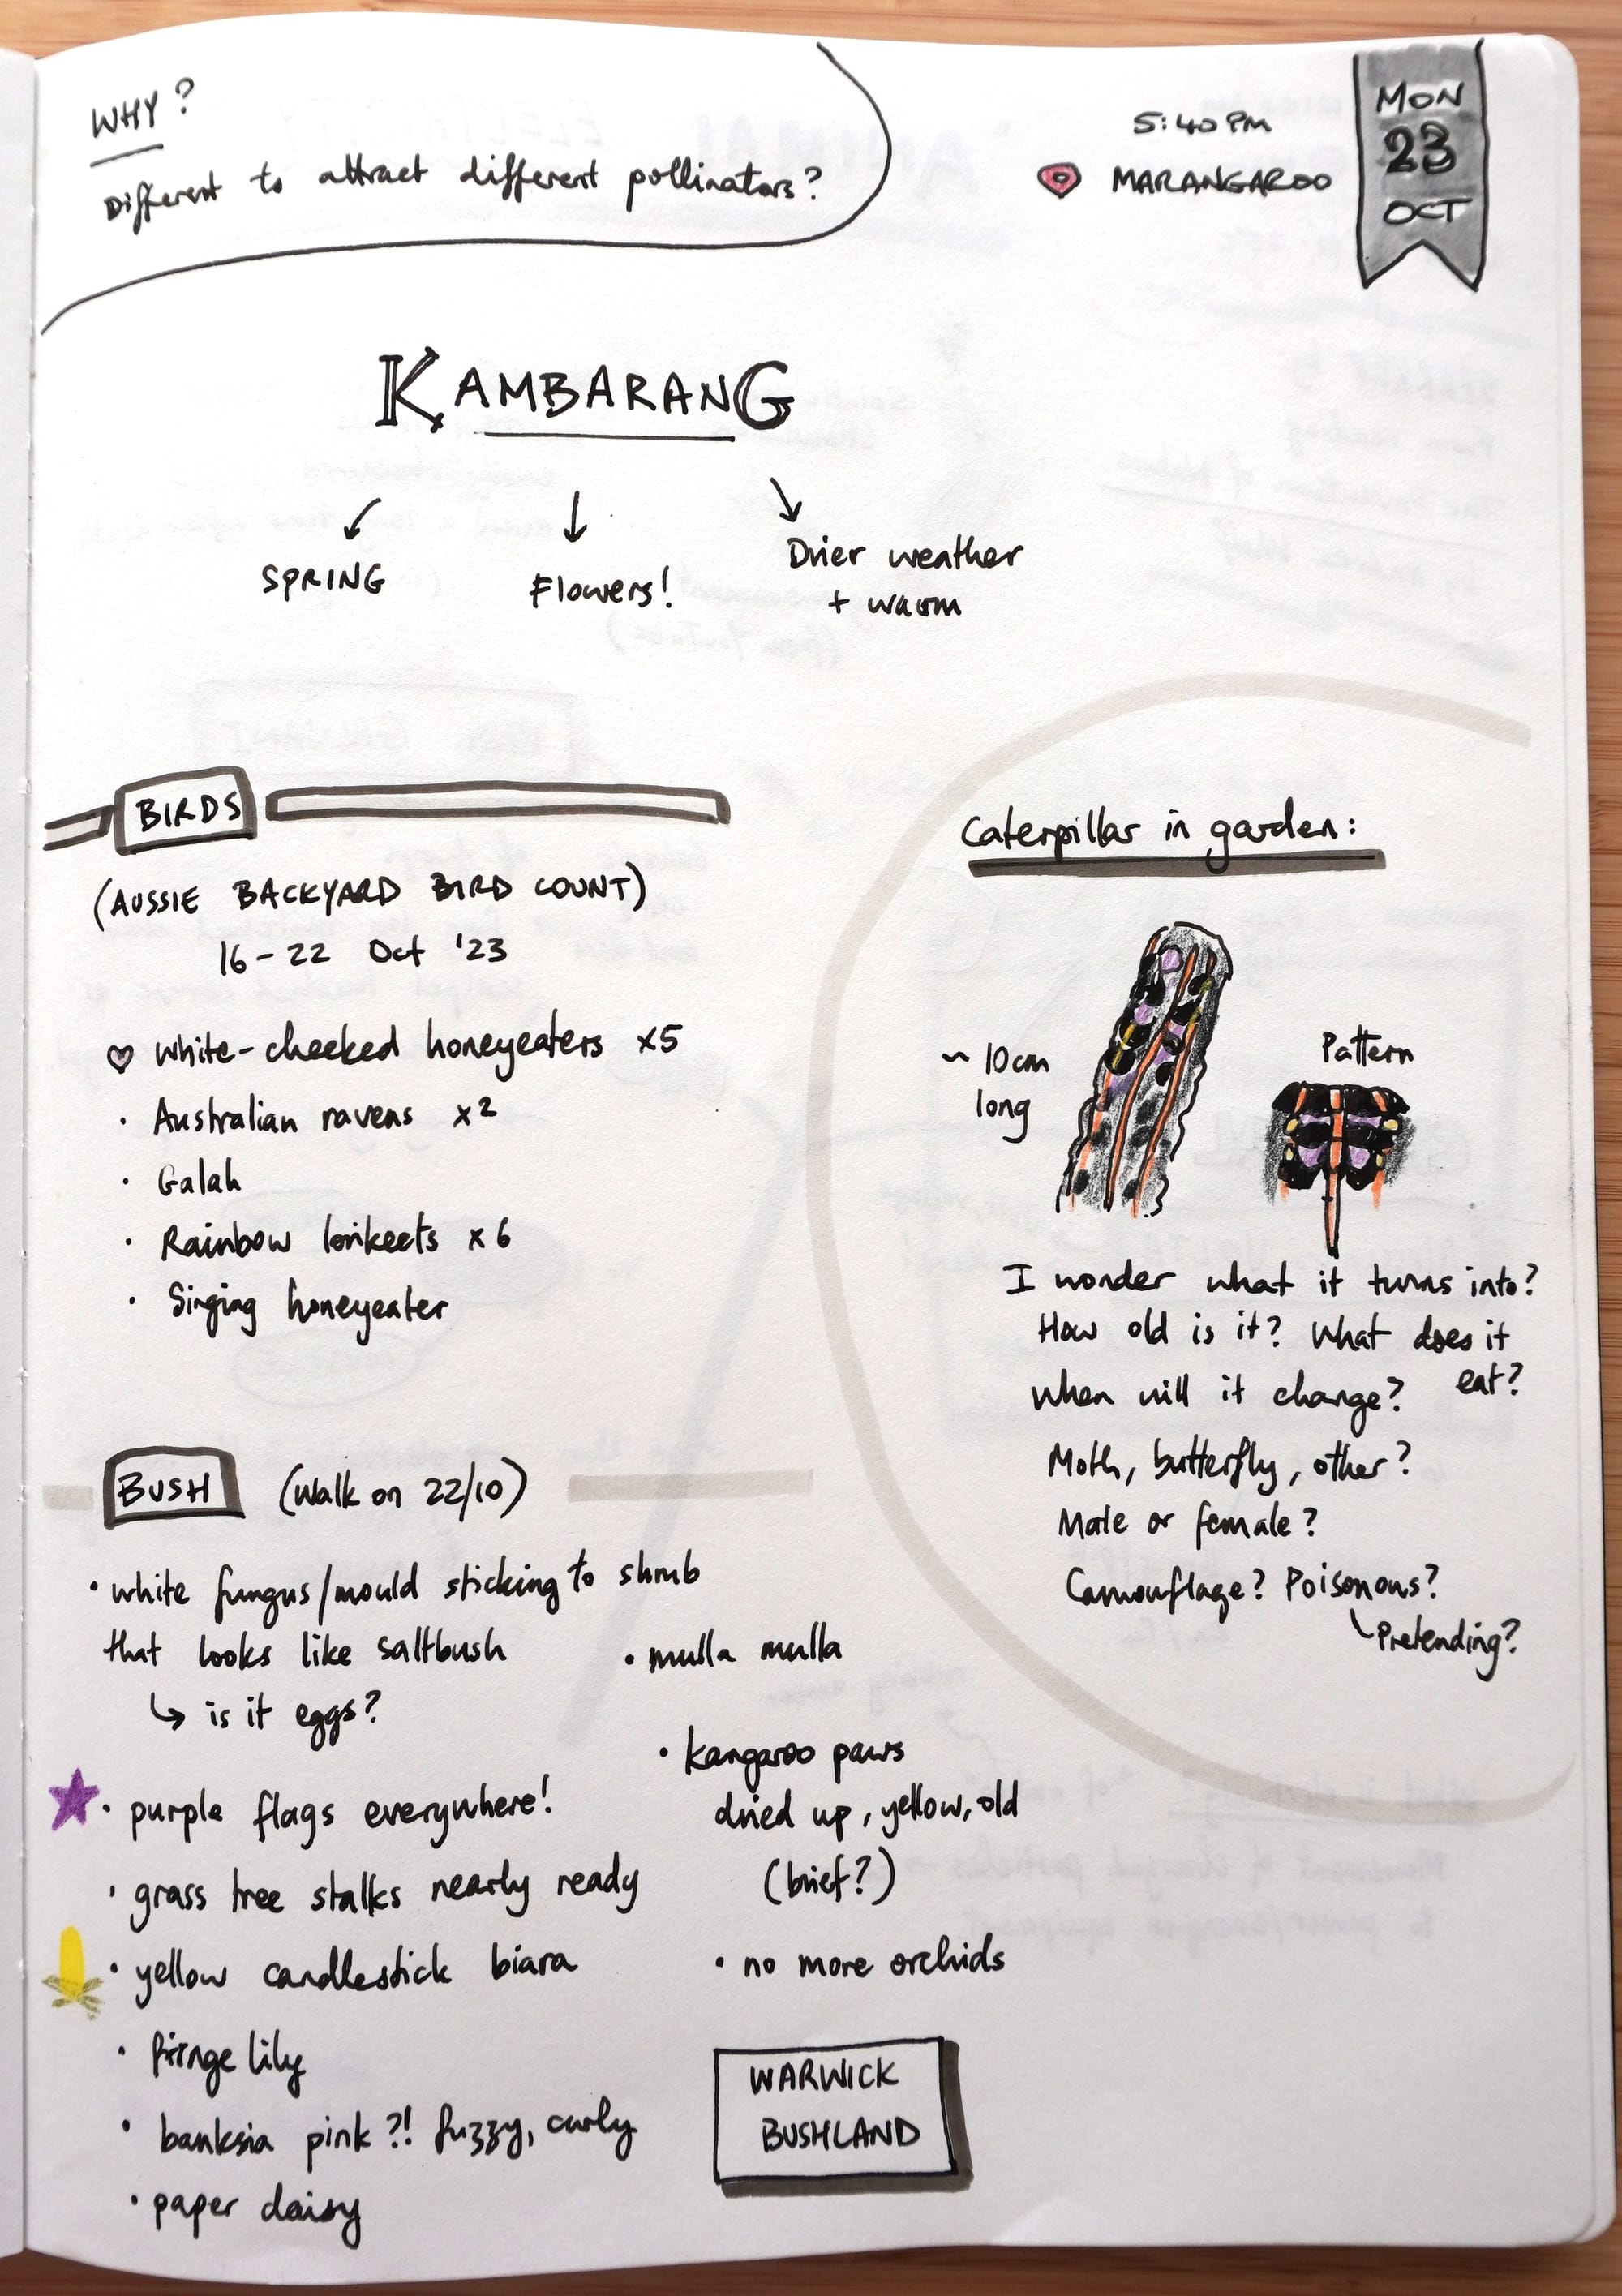 The season of Kambarang